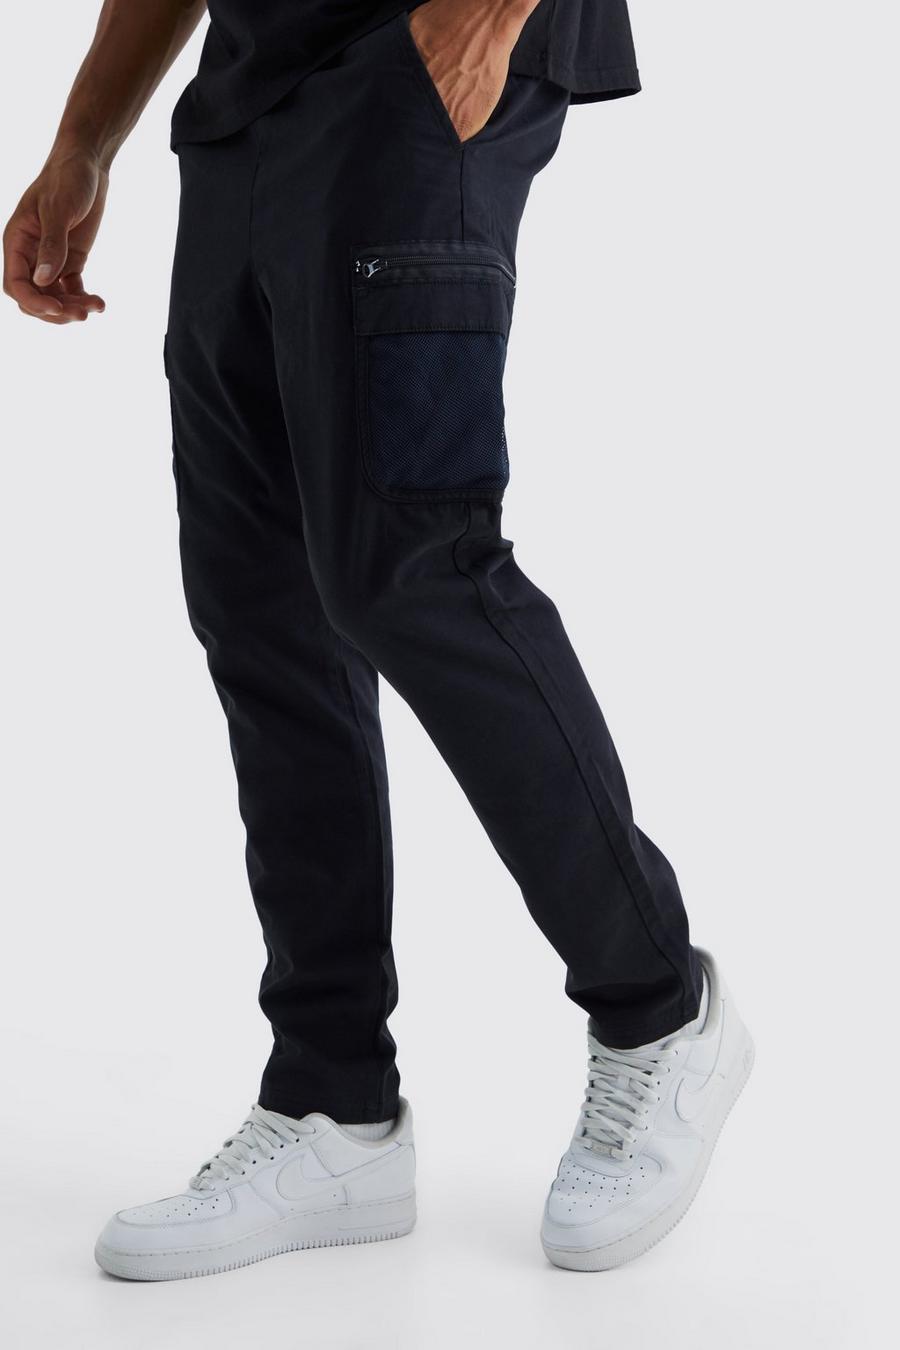 Black Tall Elastic Comfort Mesh Pocket Cargo Pants